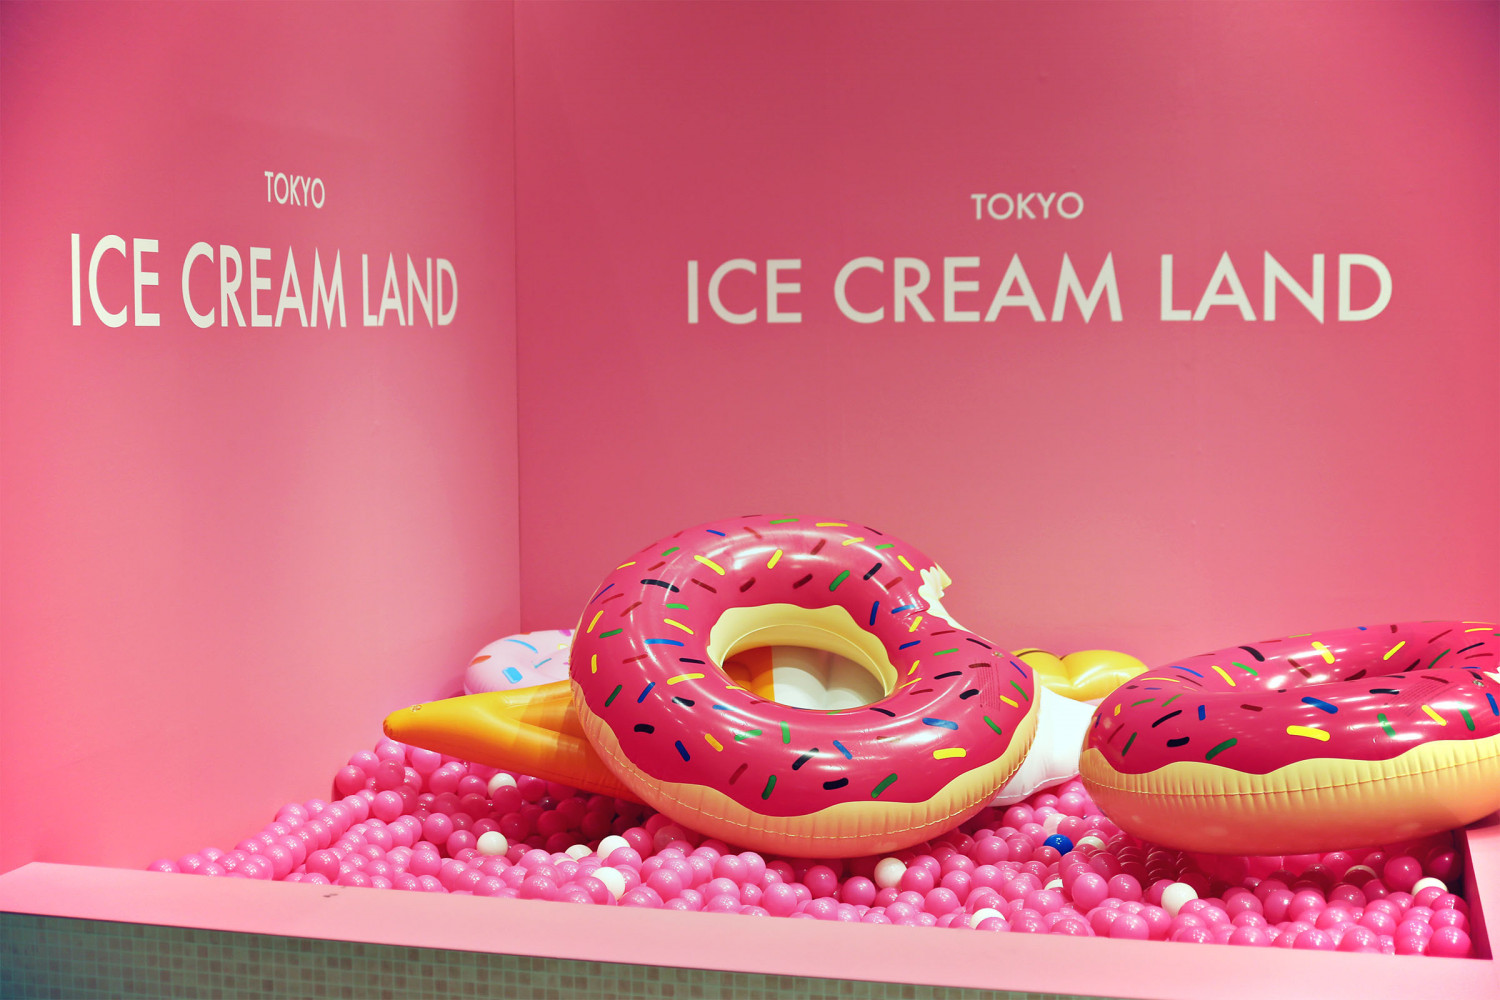 Enjoy the Sweetest Photo Spots at TOKYO ICE CREAM LAND